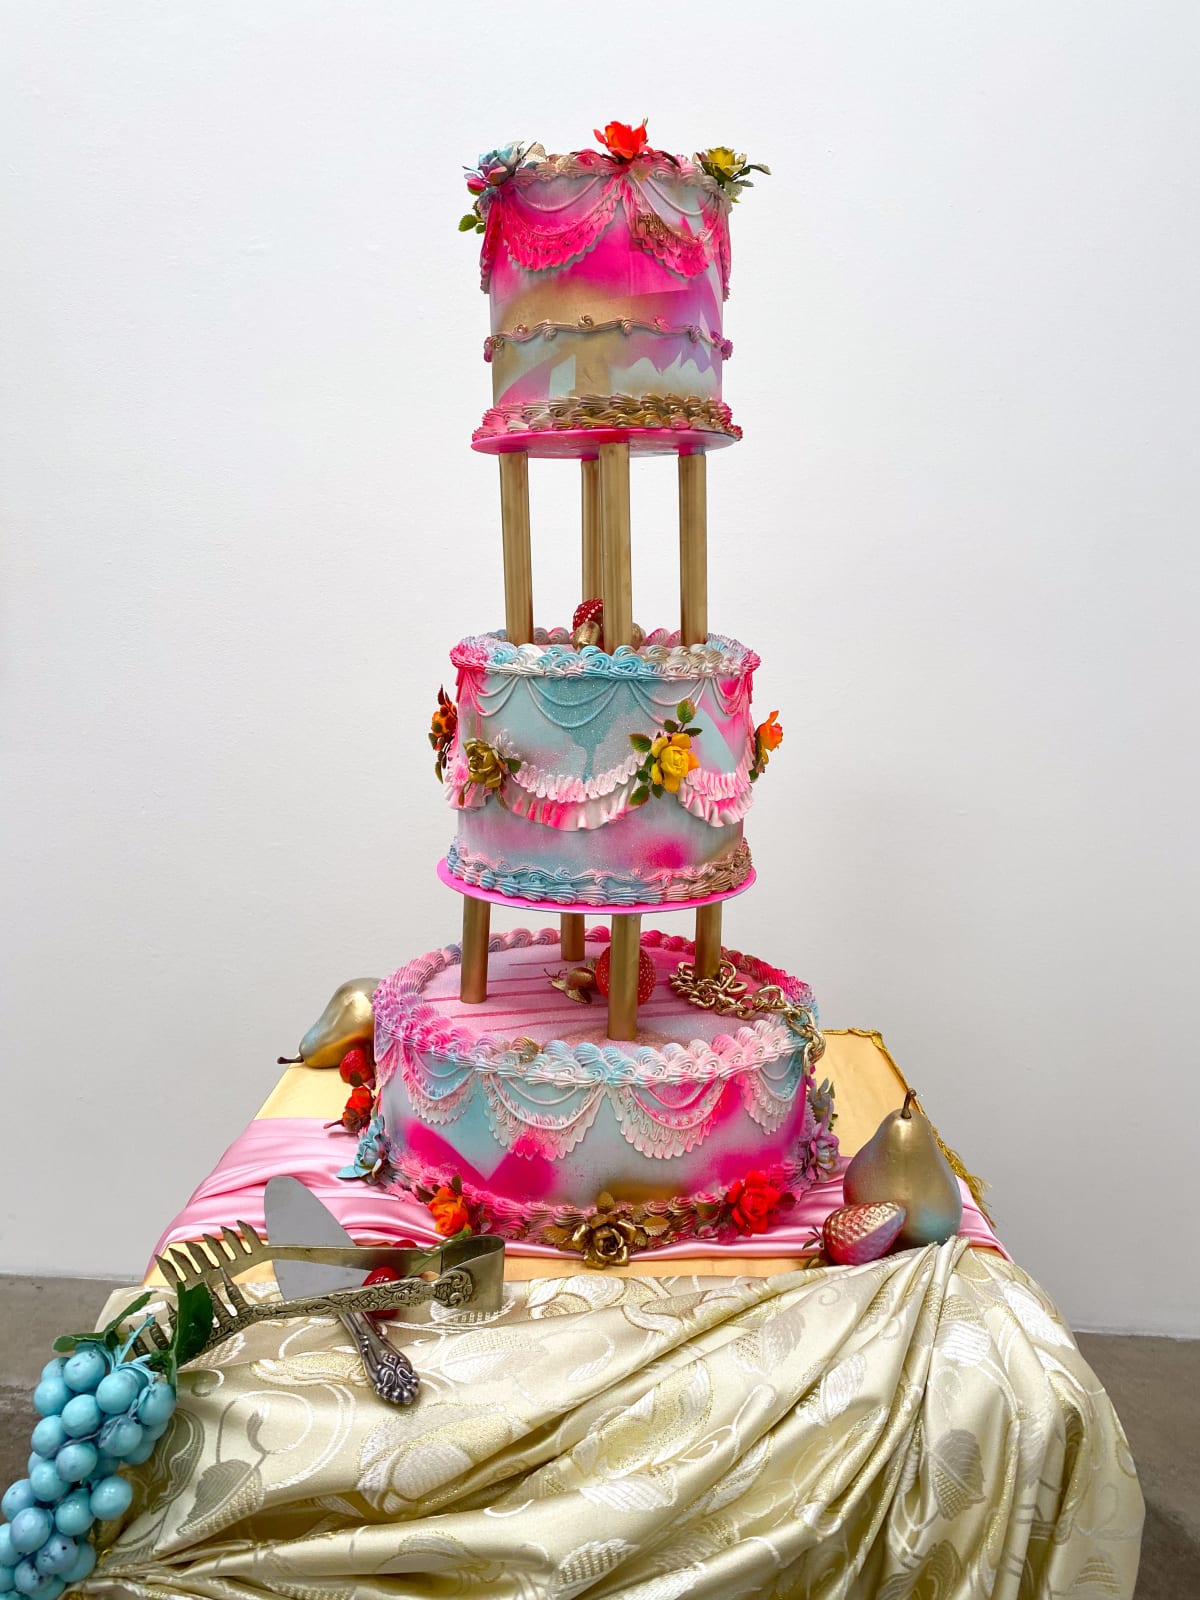 Amanda Rowan, Layered wedding cake, 2022